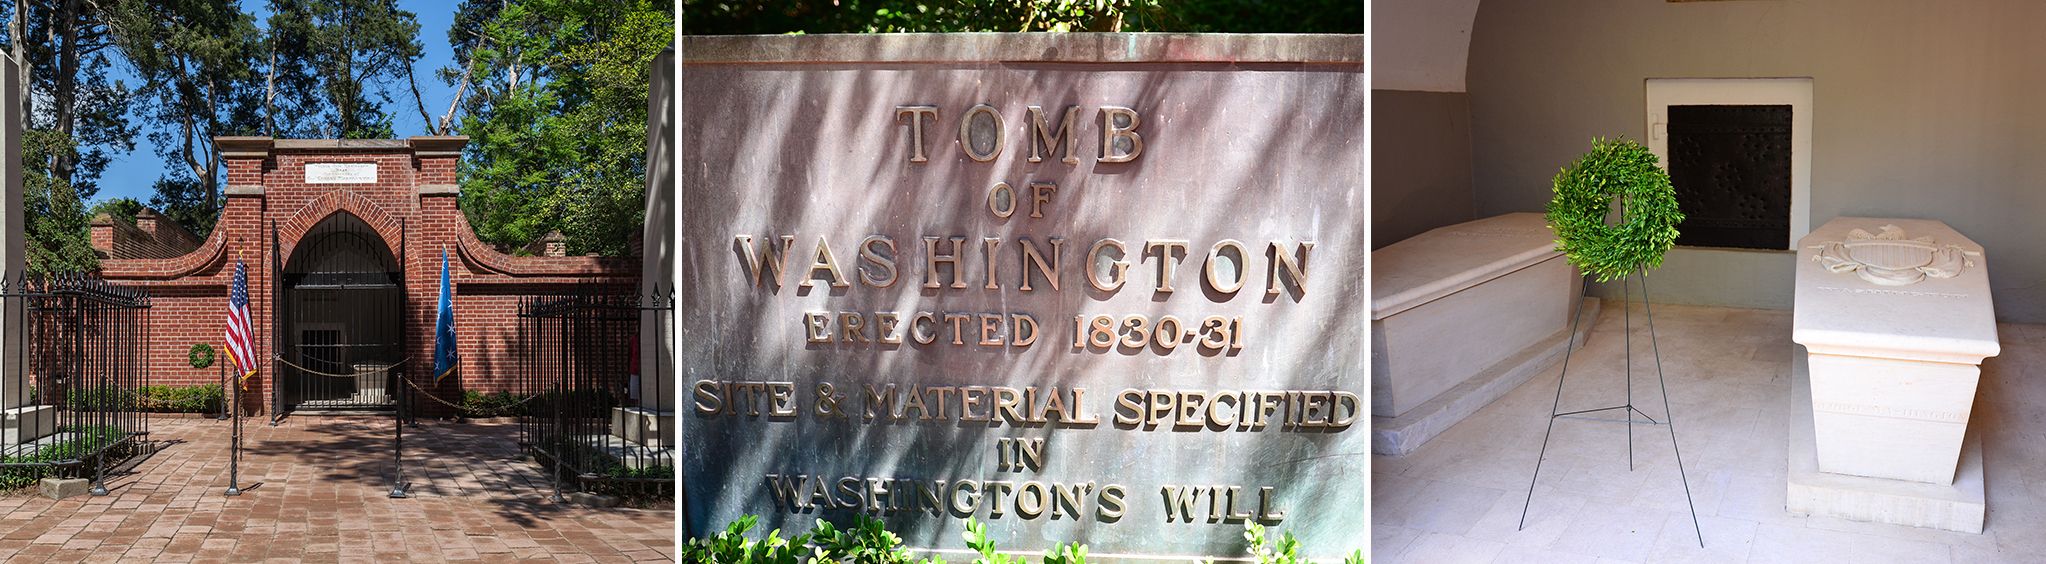 Washington's Tomb at Mount Vernon